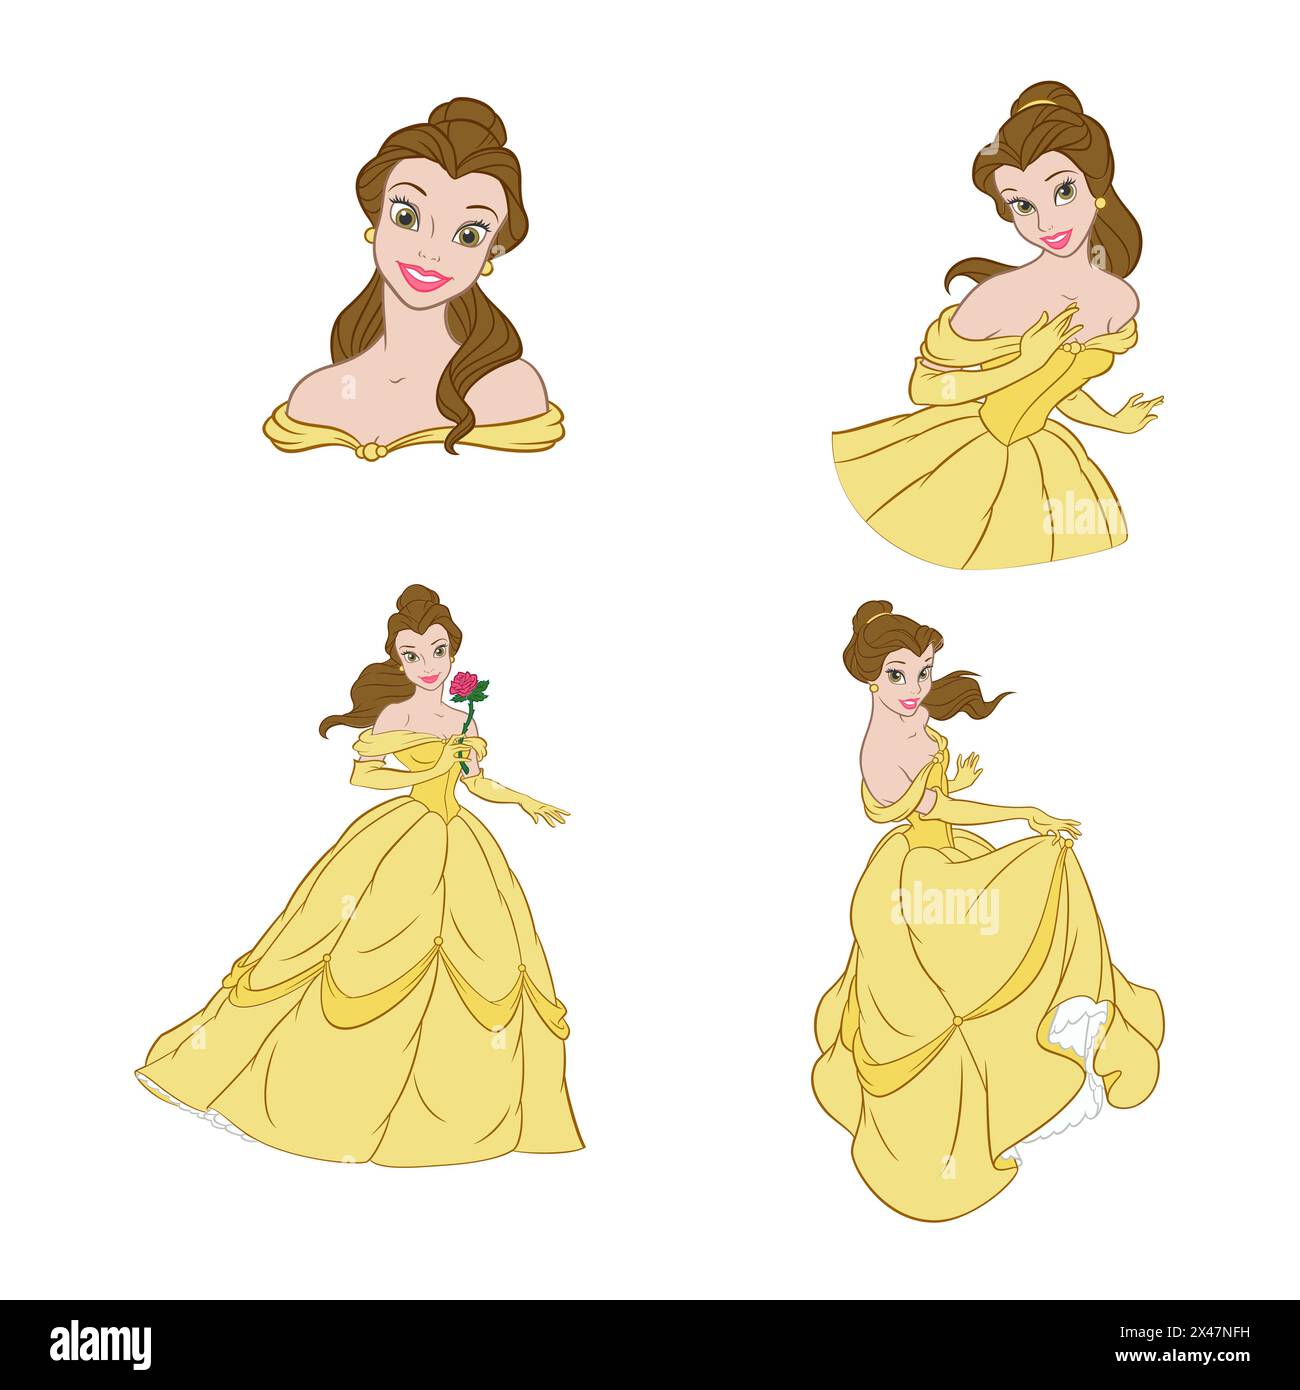 Disney princess belle beauty fairy tale fantasy vector illustration Stock Vector